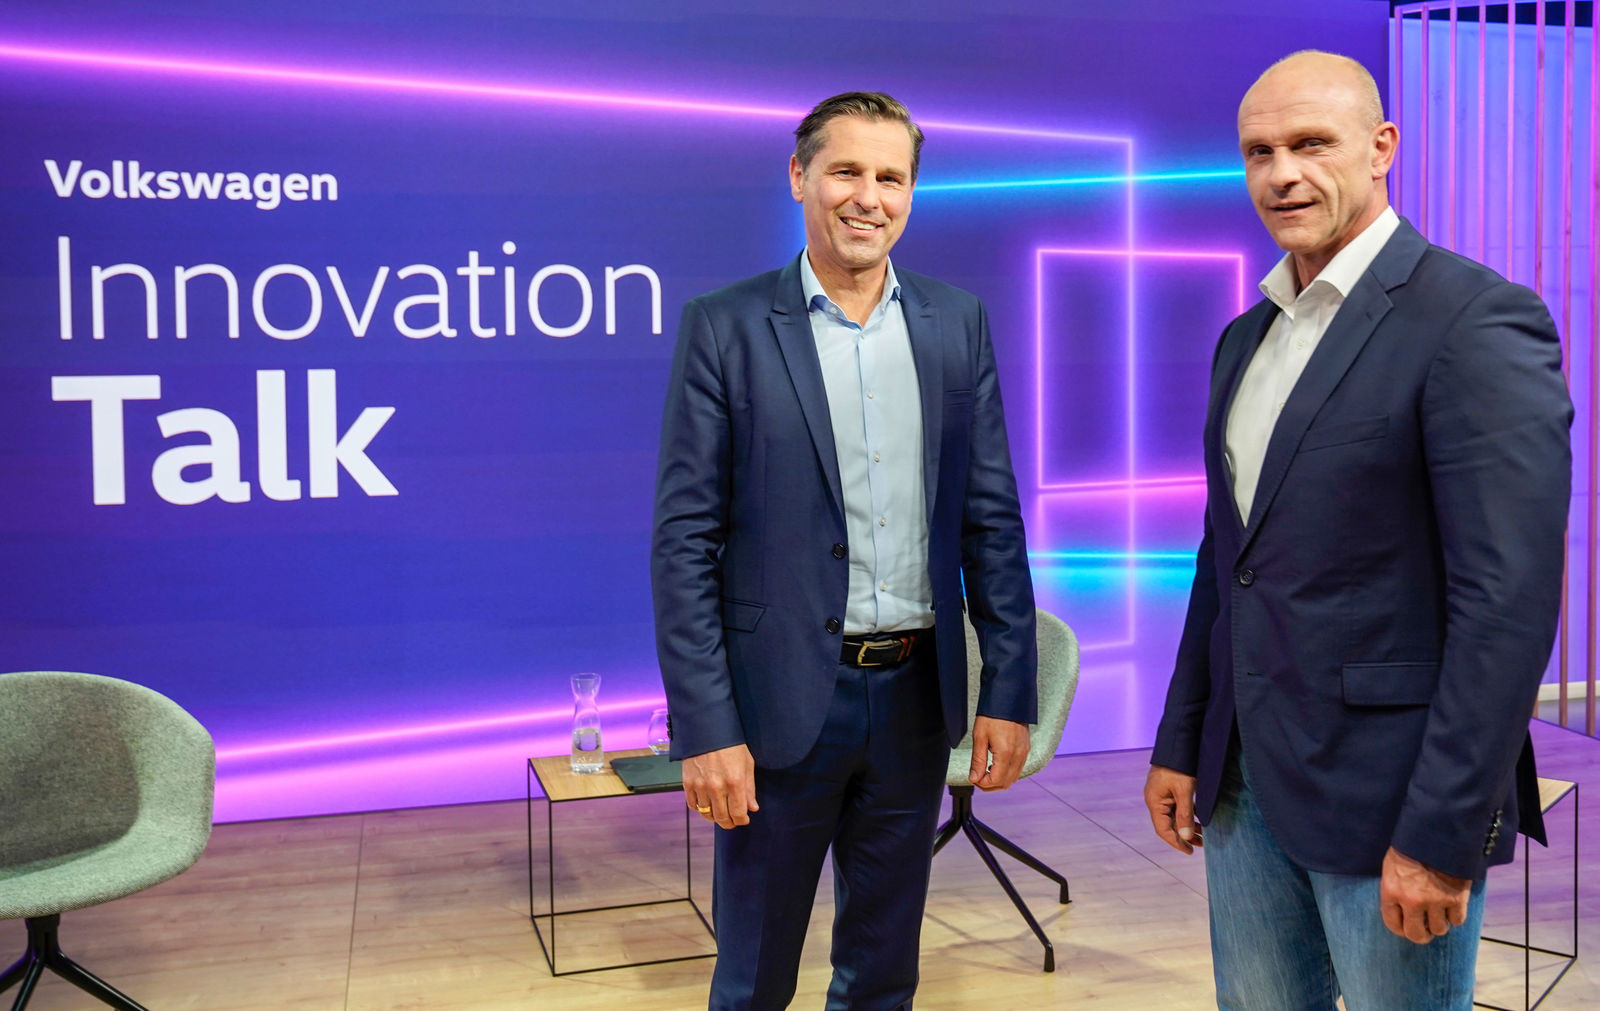 Innovation Talk - The Volkswagen Software Offensive